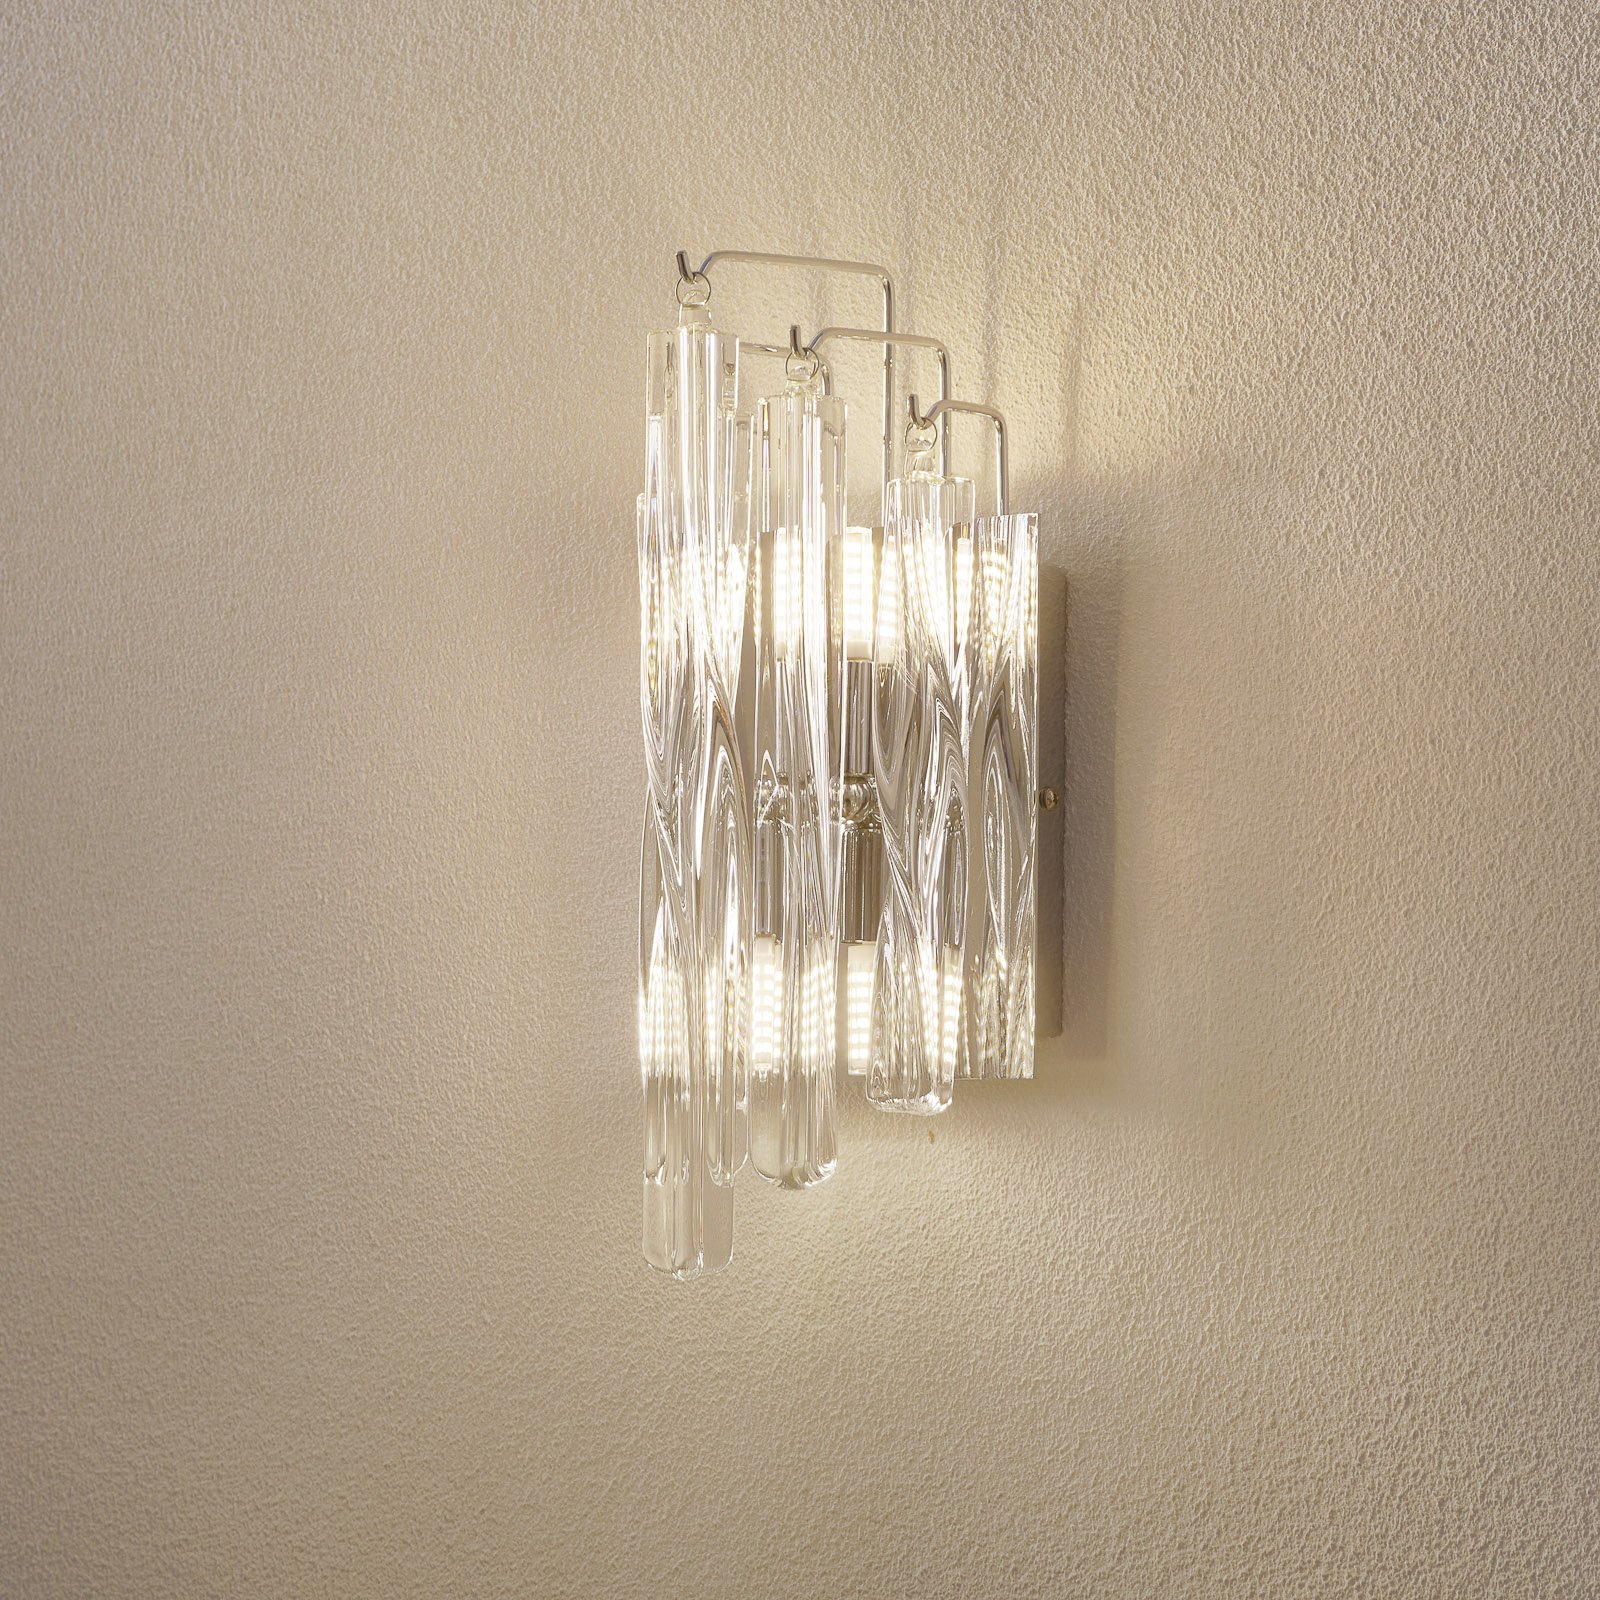 Manacor crystal glass wall light with LED